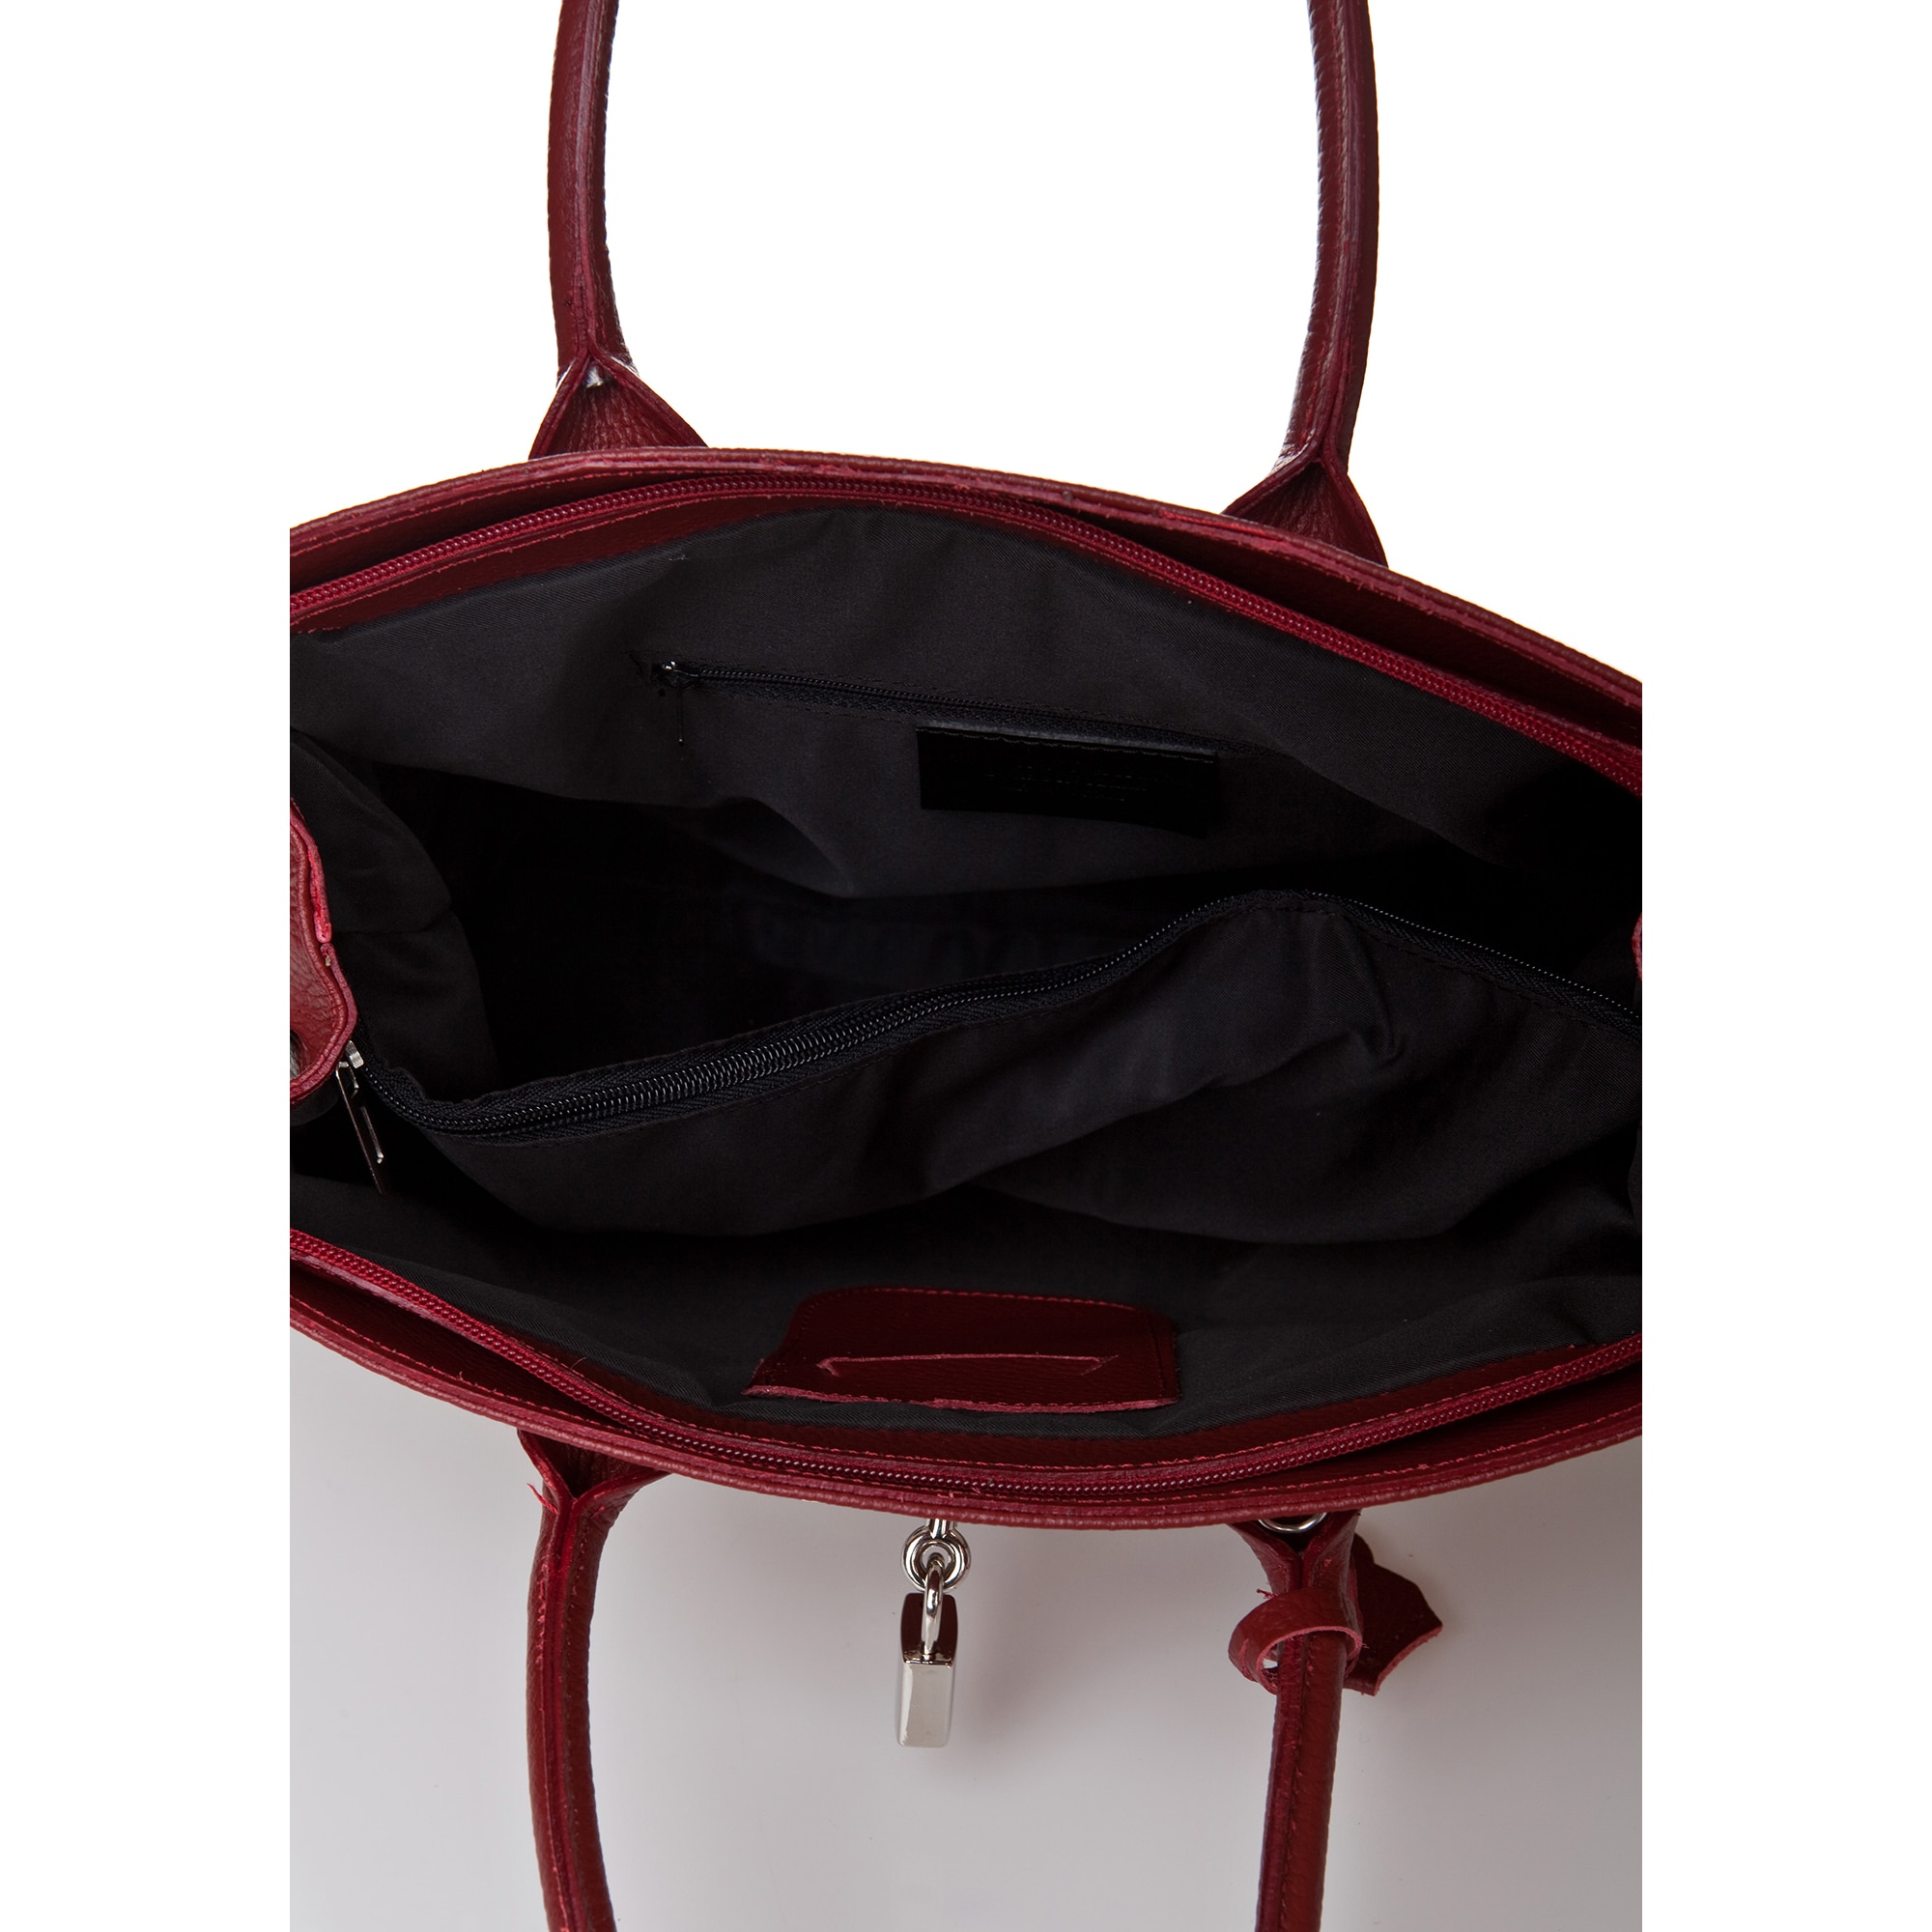 markese leather handbag